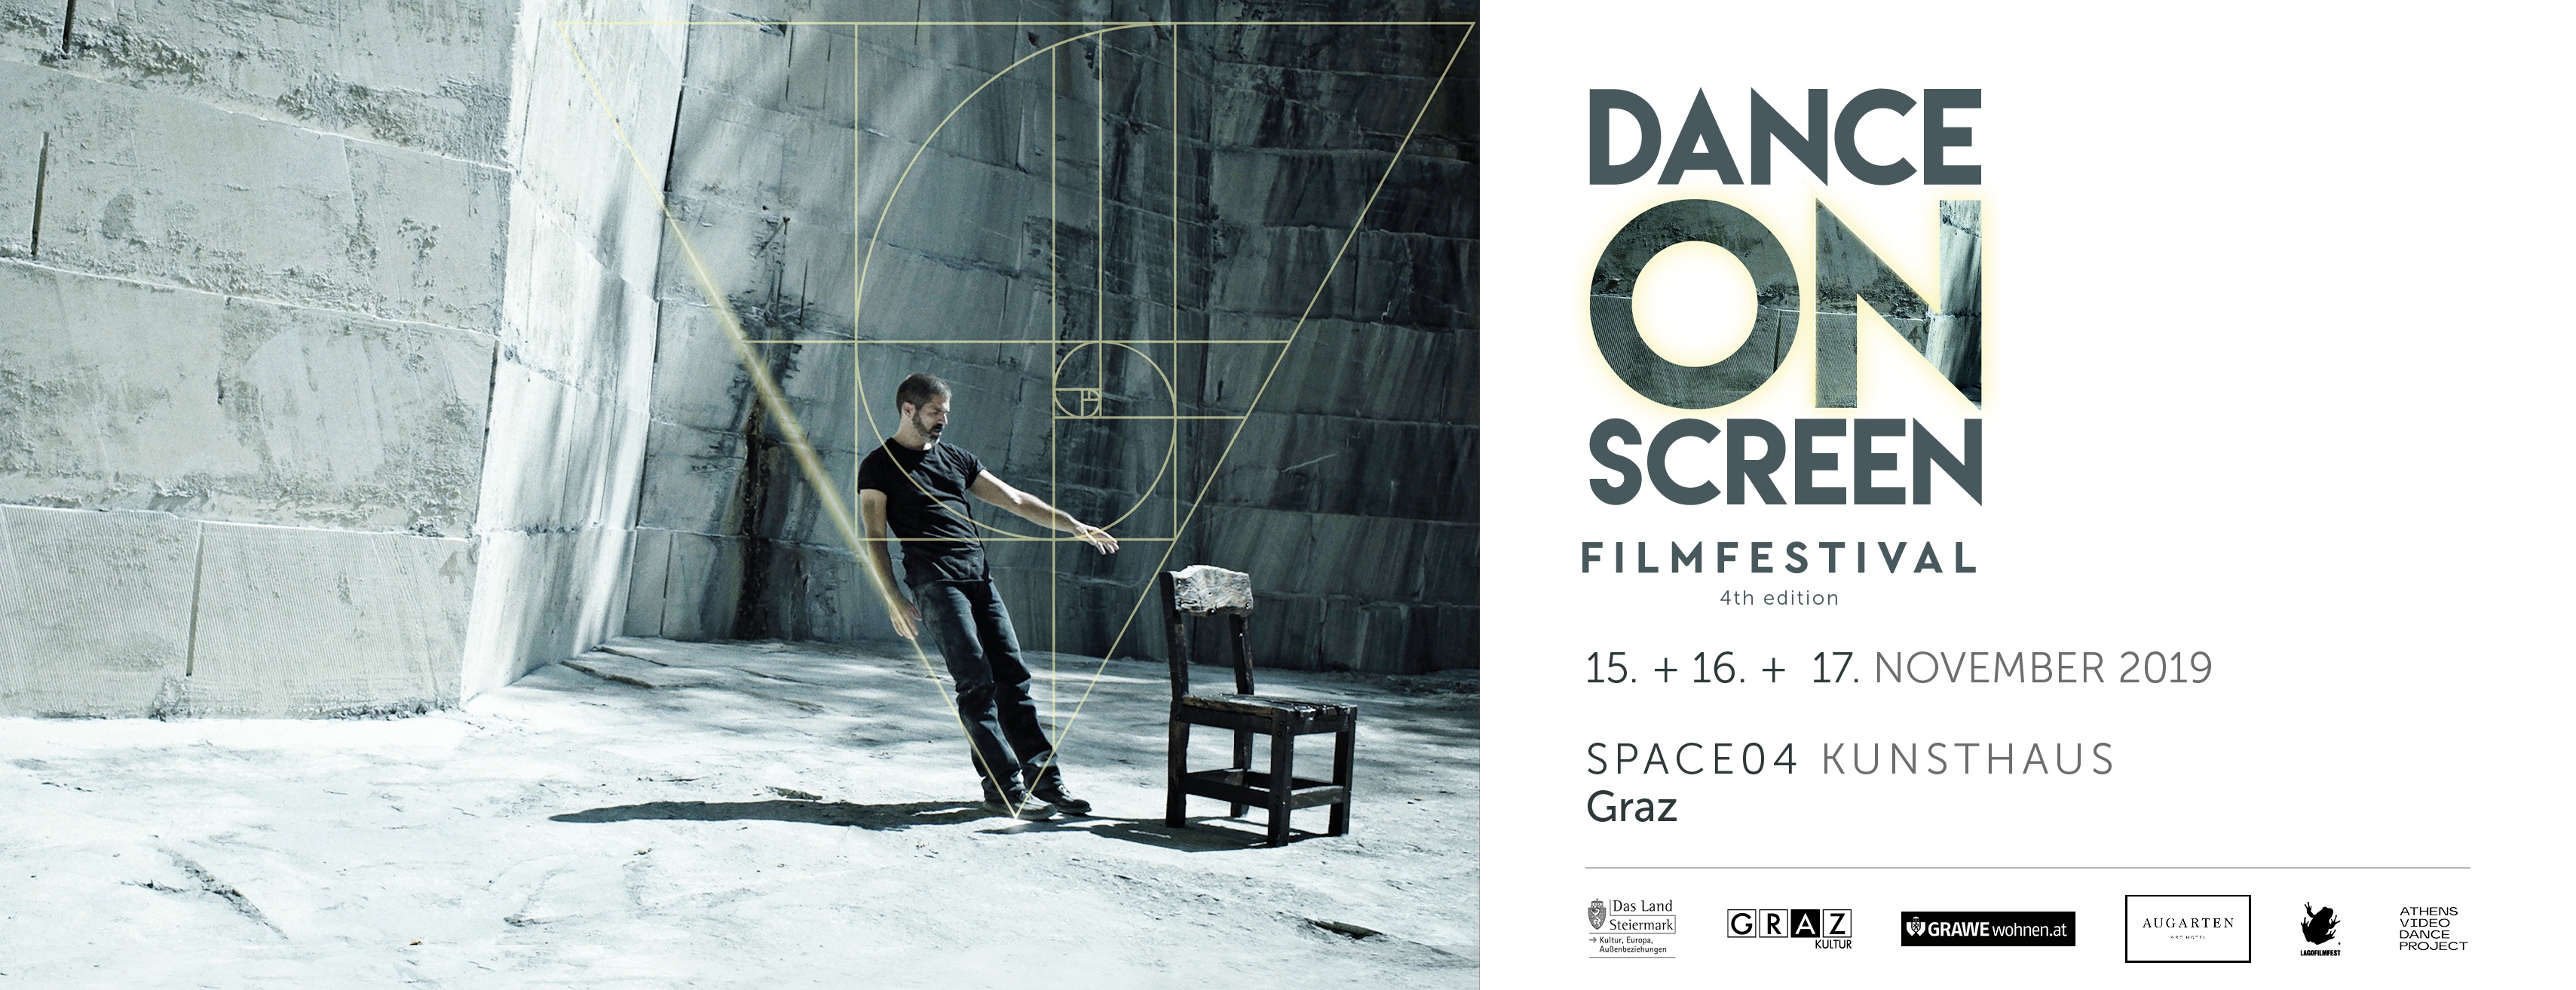 danceonscreen.at Dance On Screen 4th Edition 2019 - Dance Film Festival